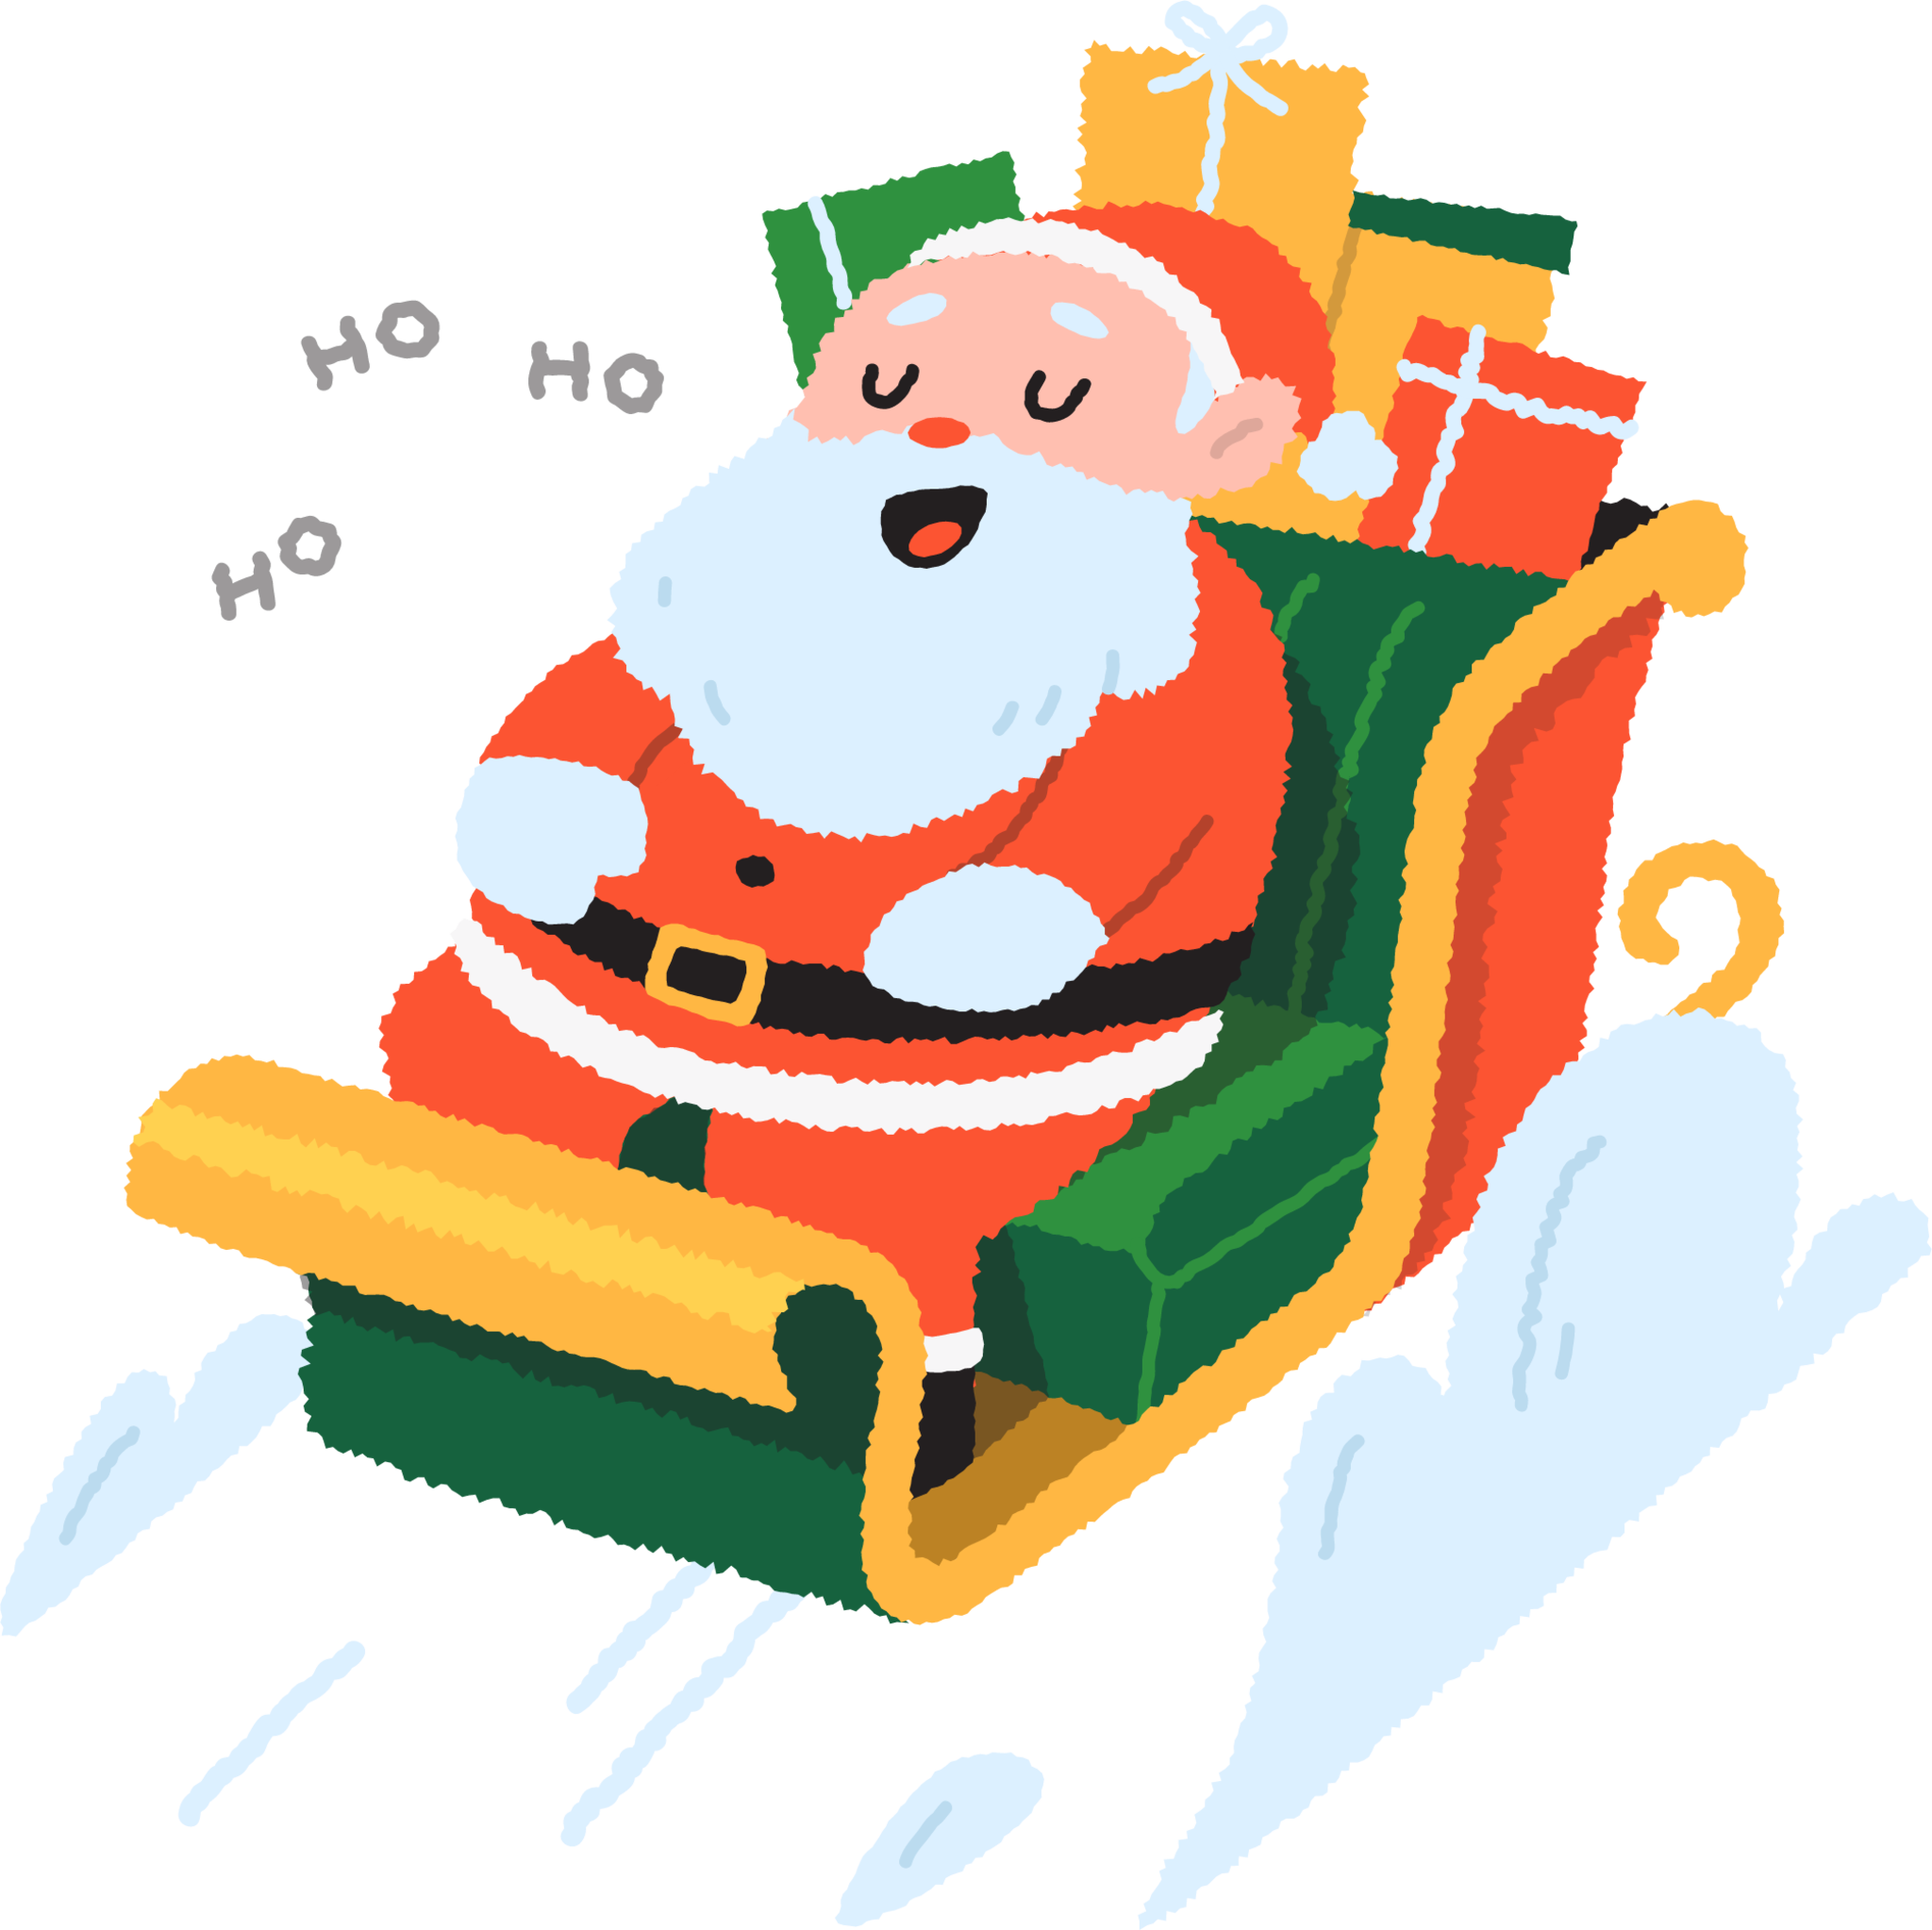 Santa sleigh santa claus ho ho ho gifts christmas holidays illustration